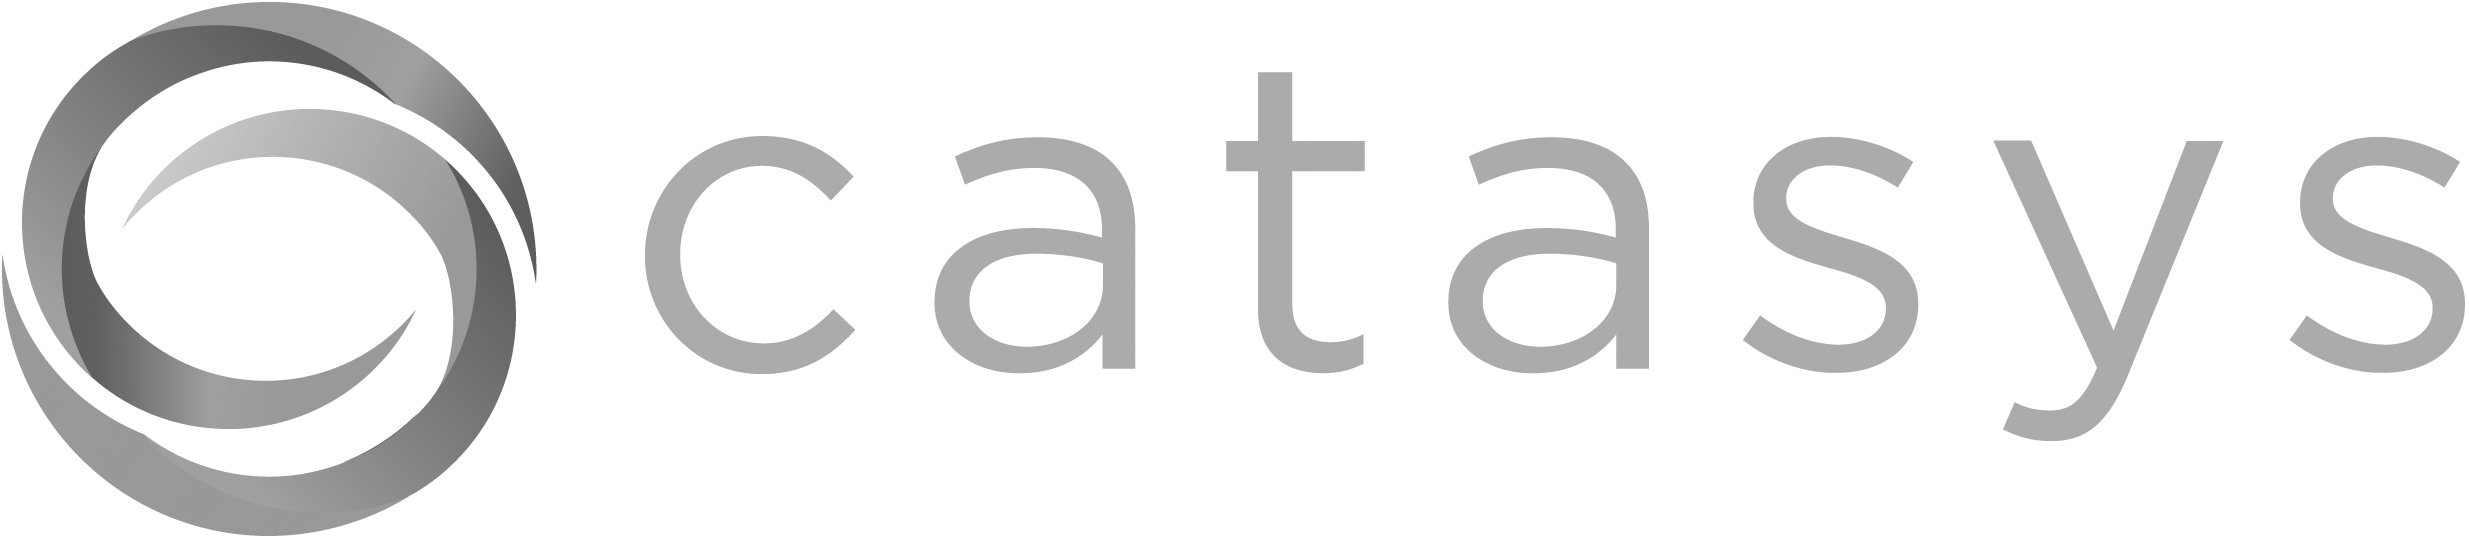 catasys_logo.jpg